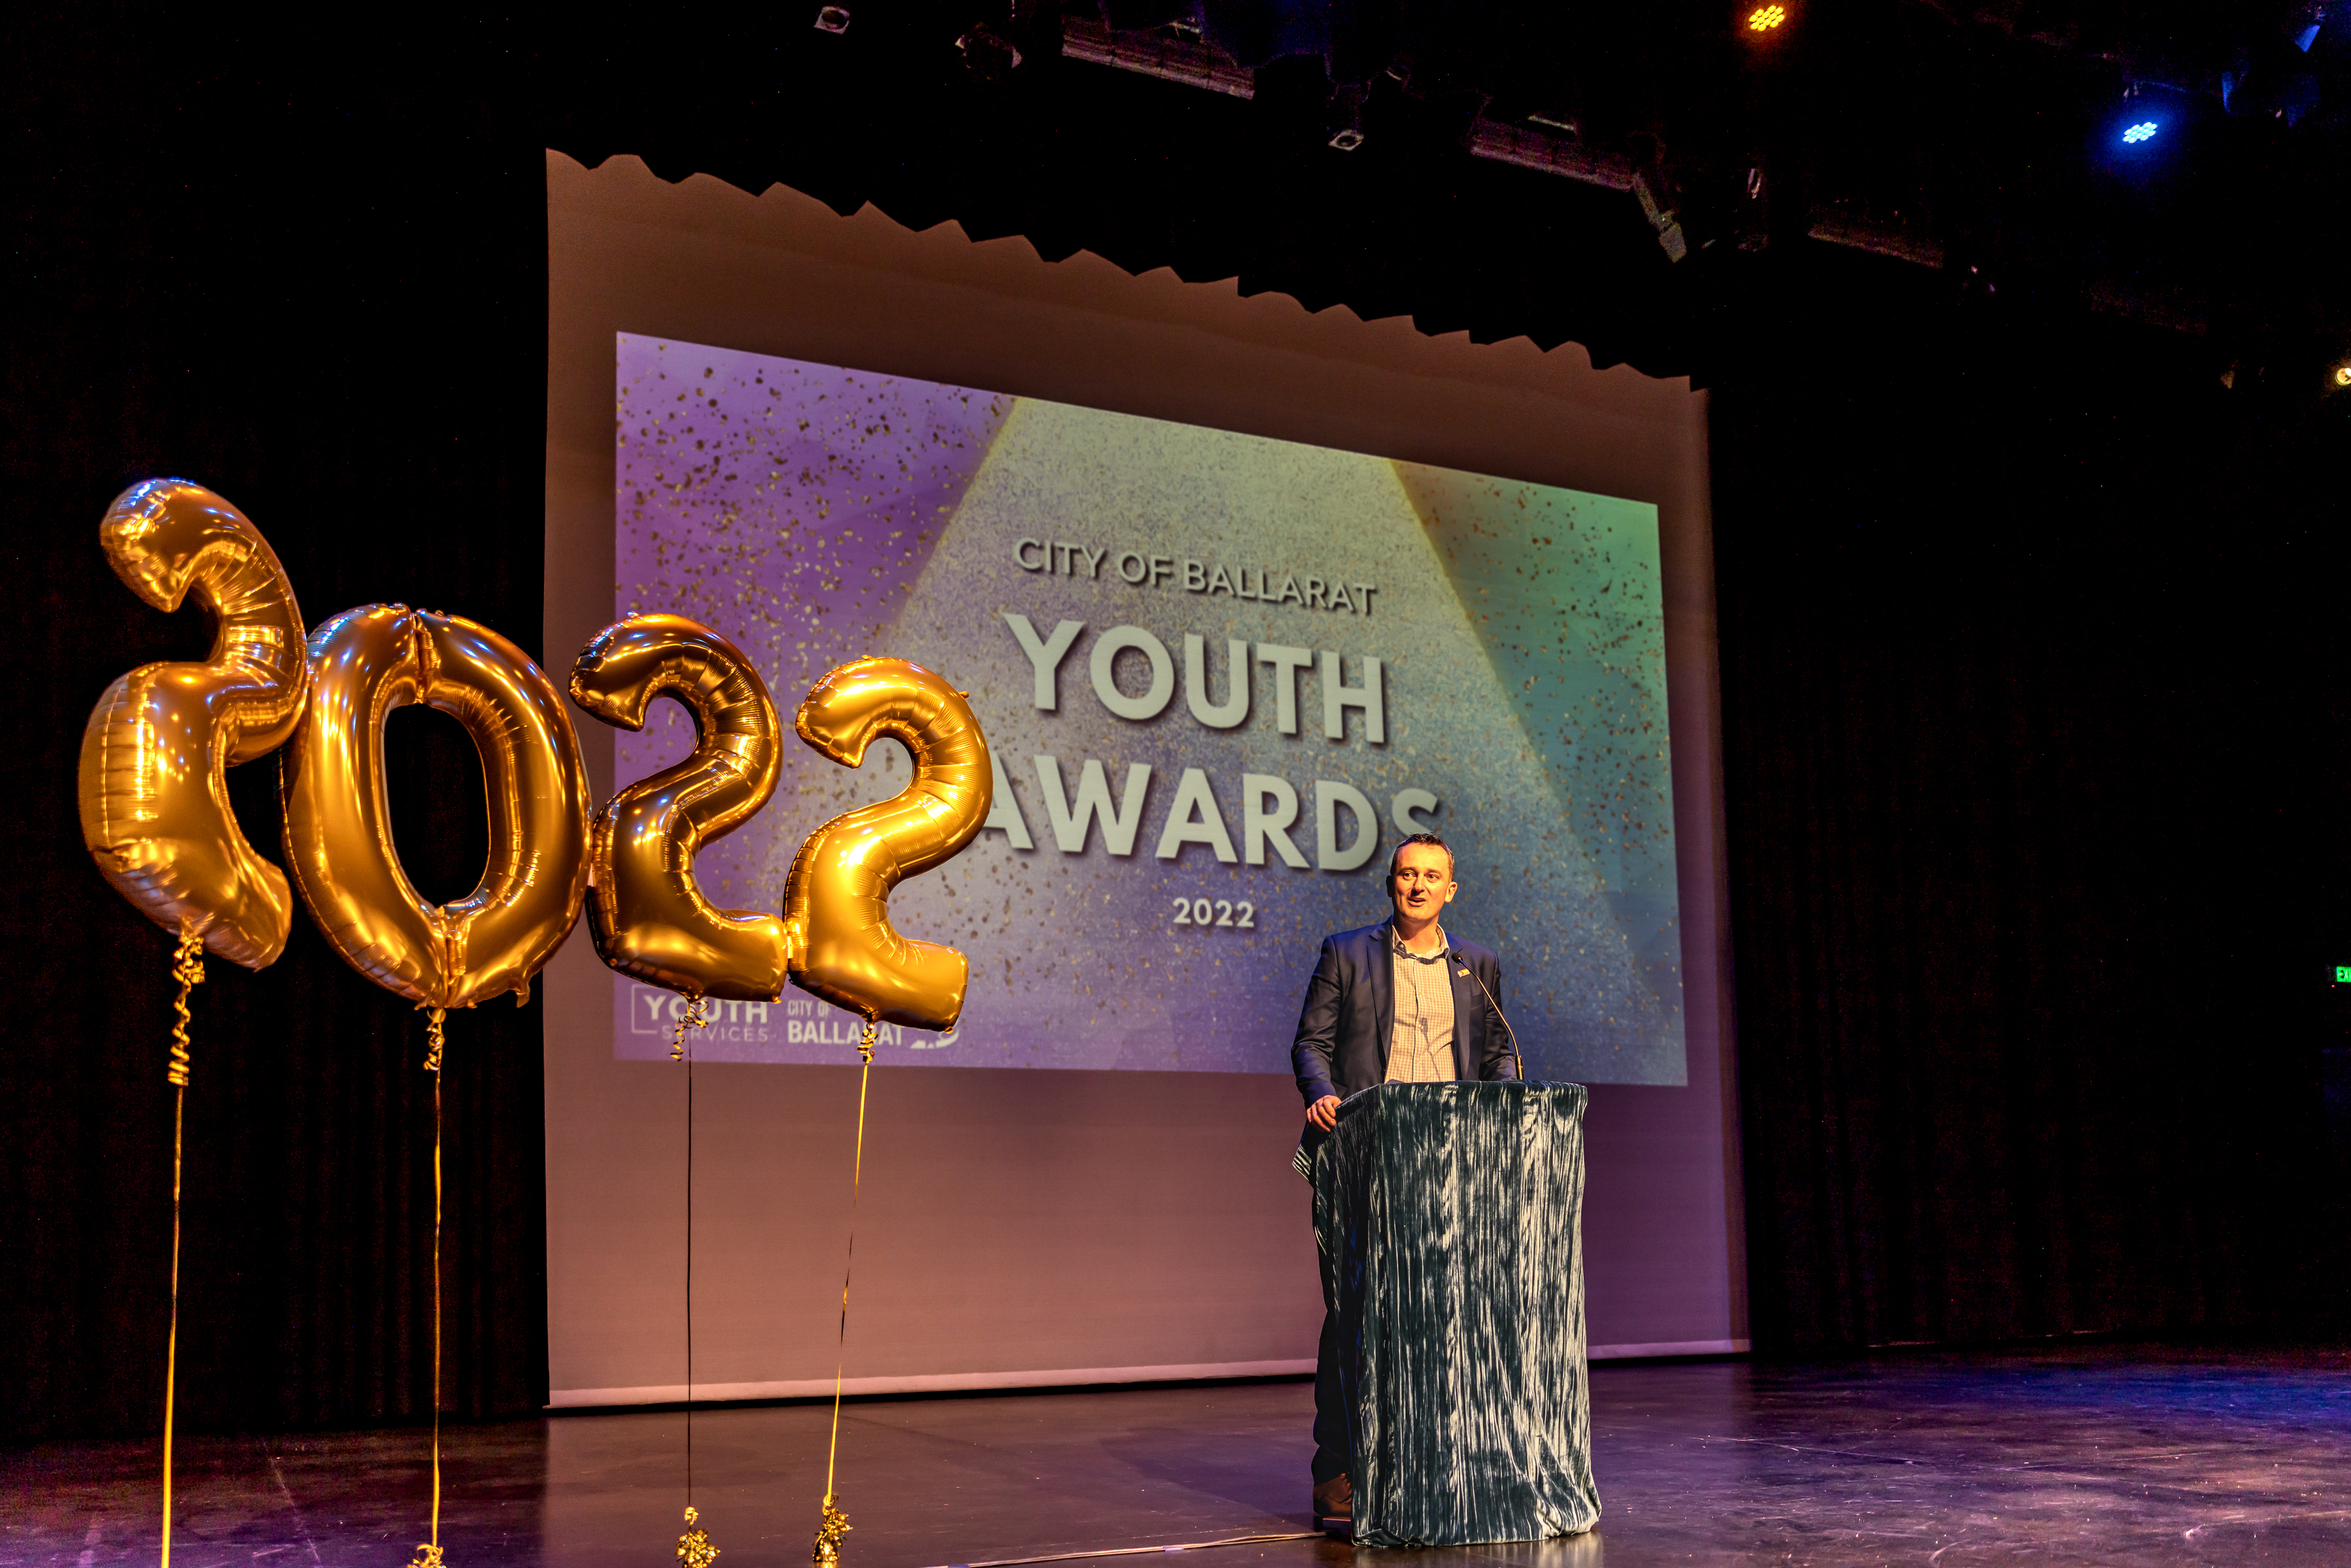 Mayor of Ballarat Cr Daniel Moloney speaking at City of Ballarat Youth Awards